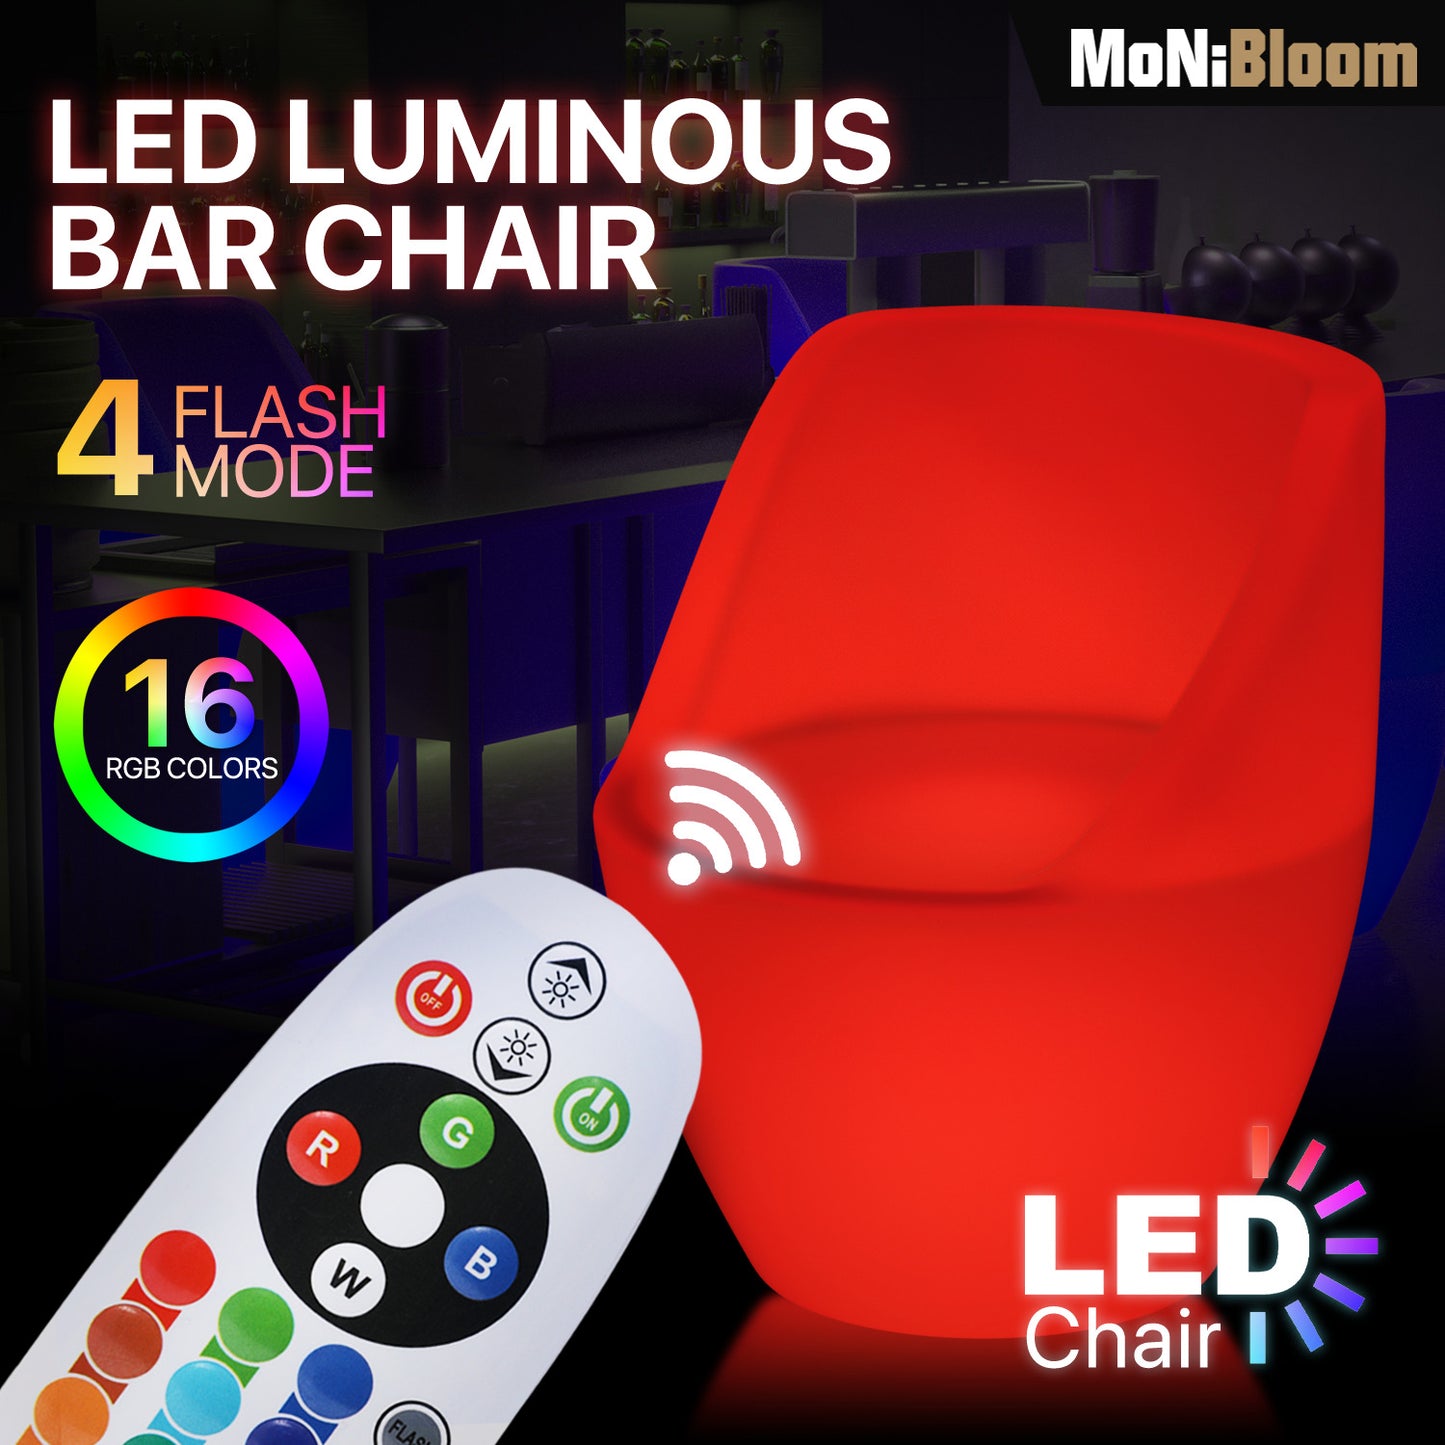 LED - Chair - Barrel Shape - 16 Colors Remote Control